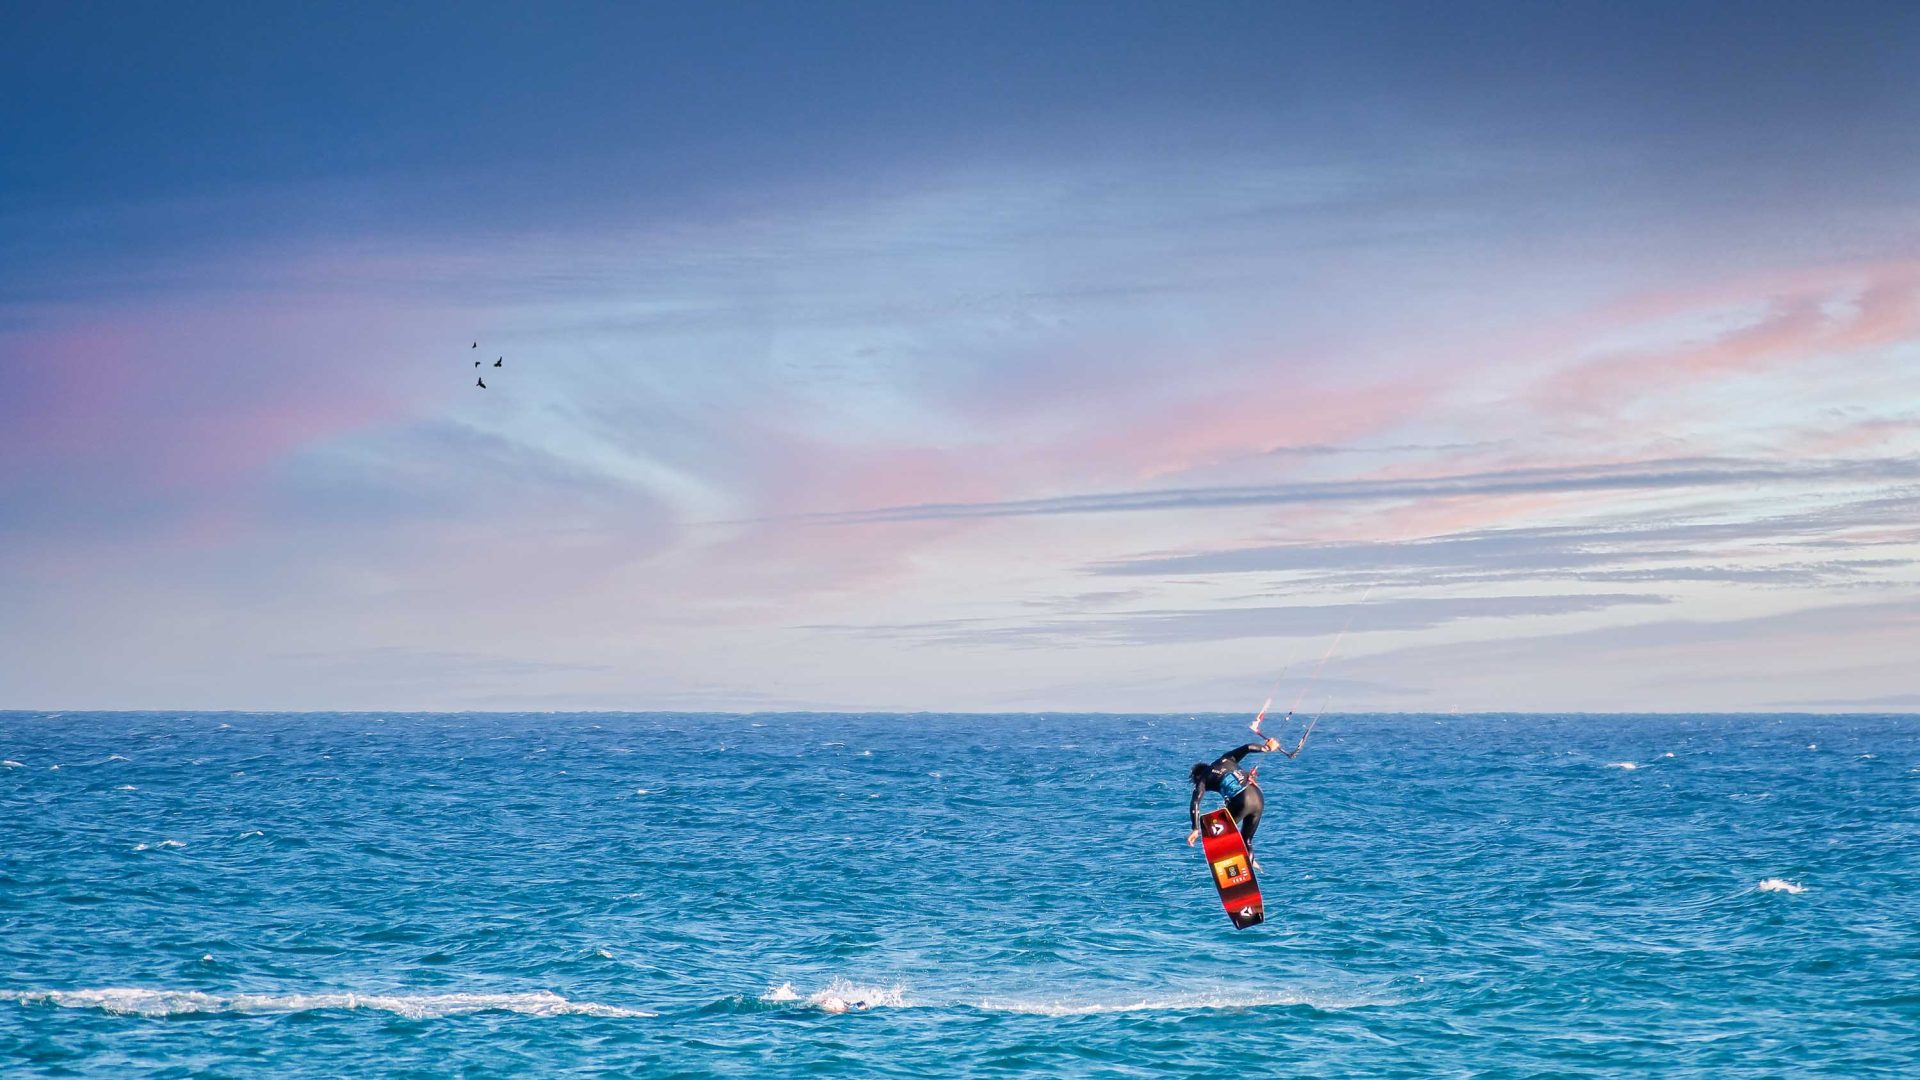 A kitesurfer jumps on a wave.